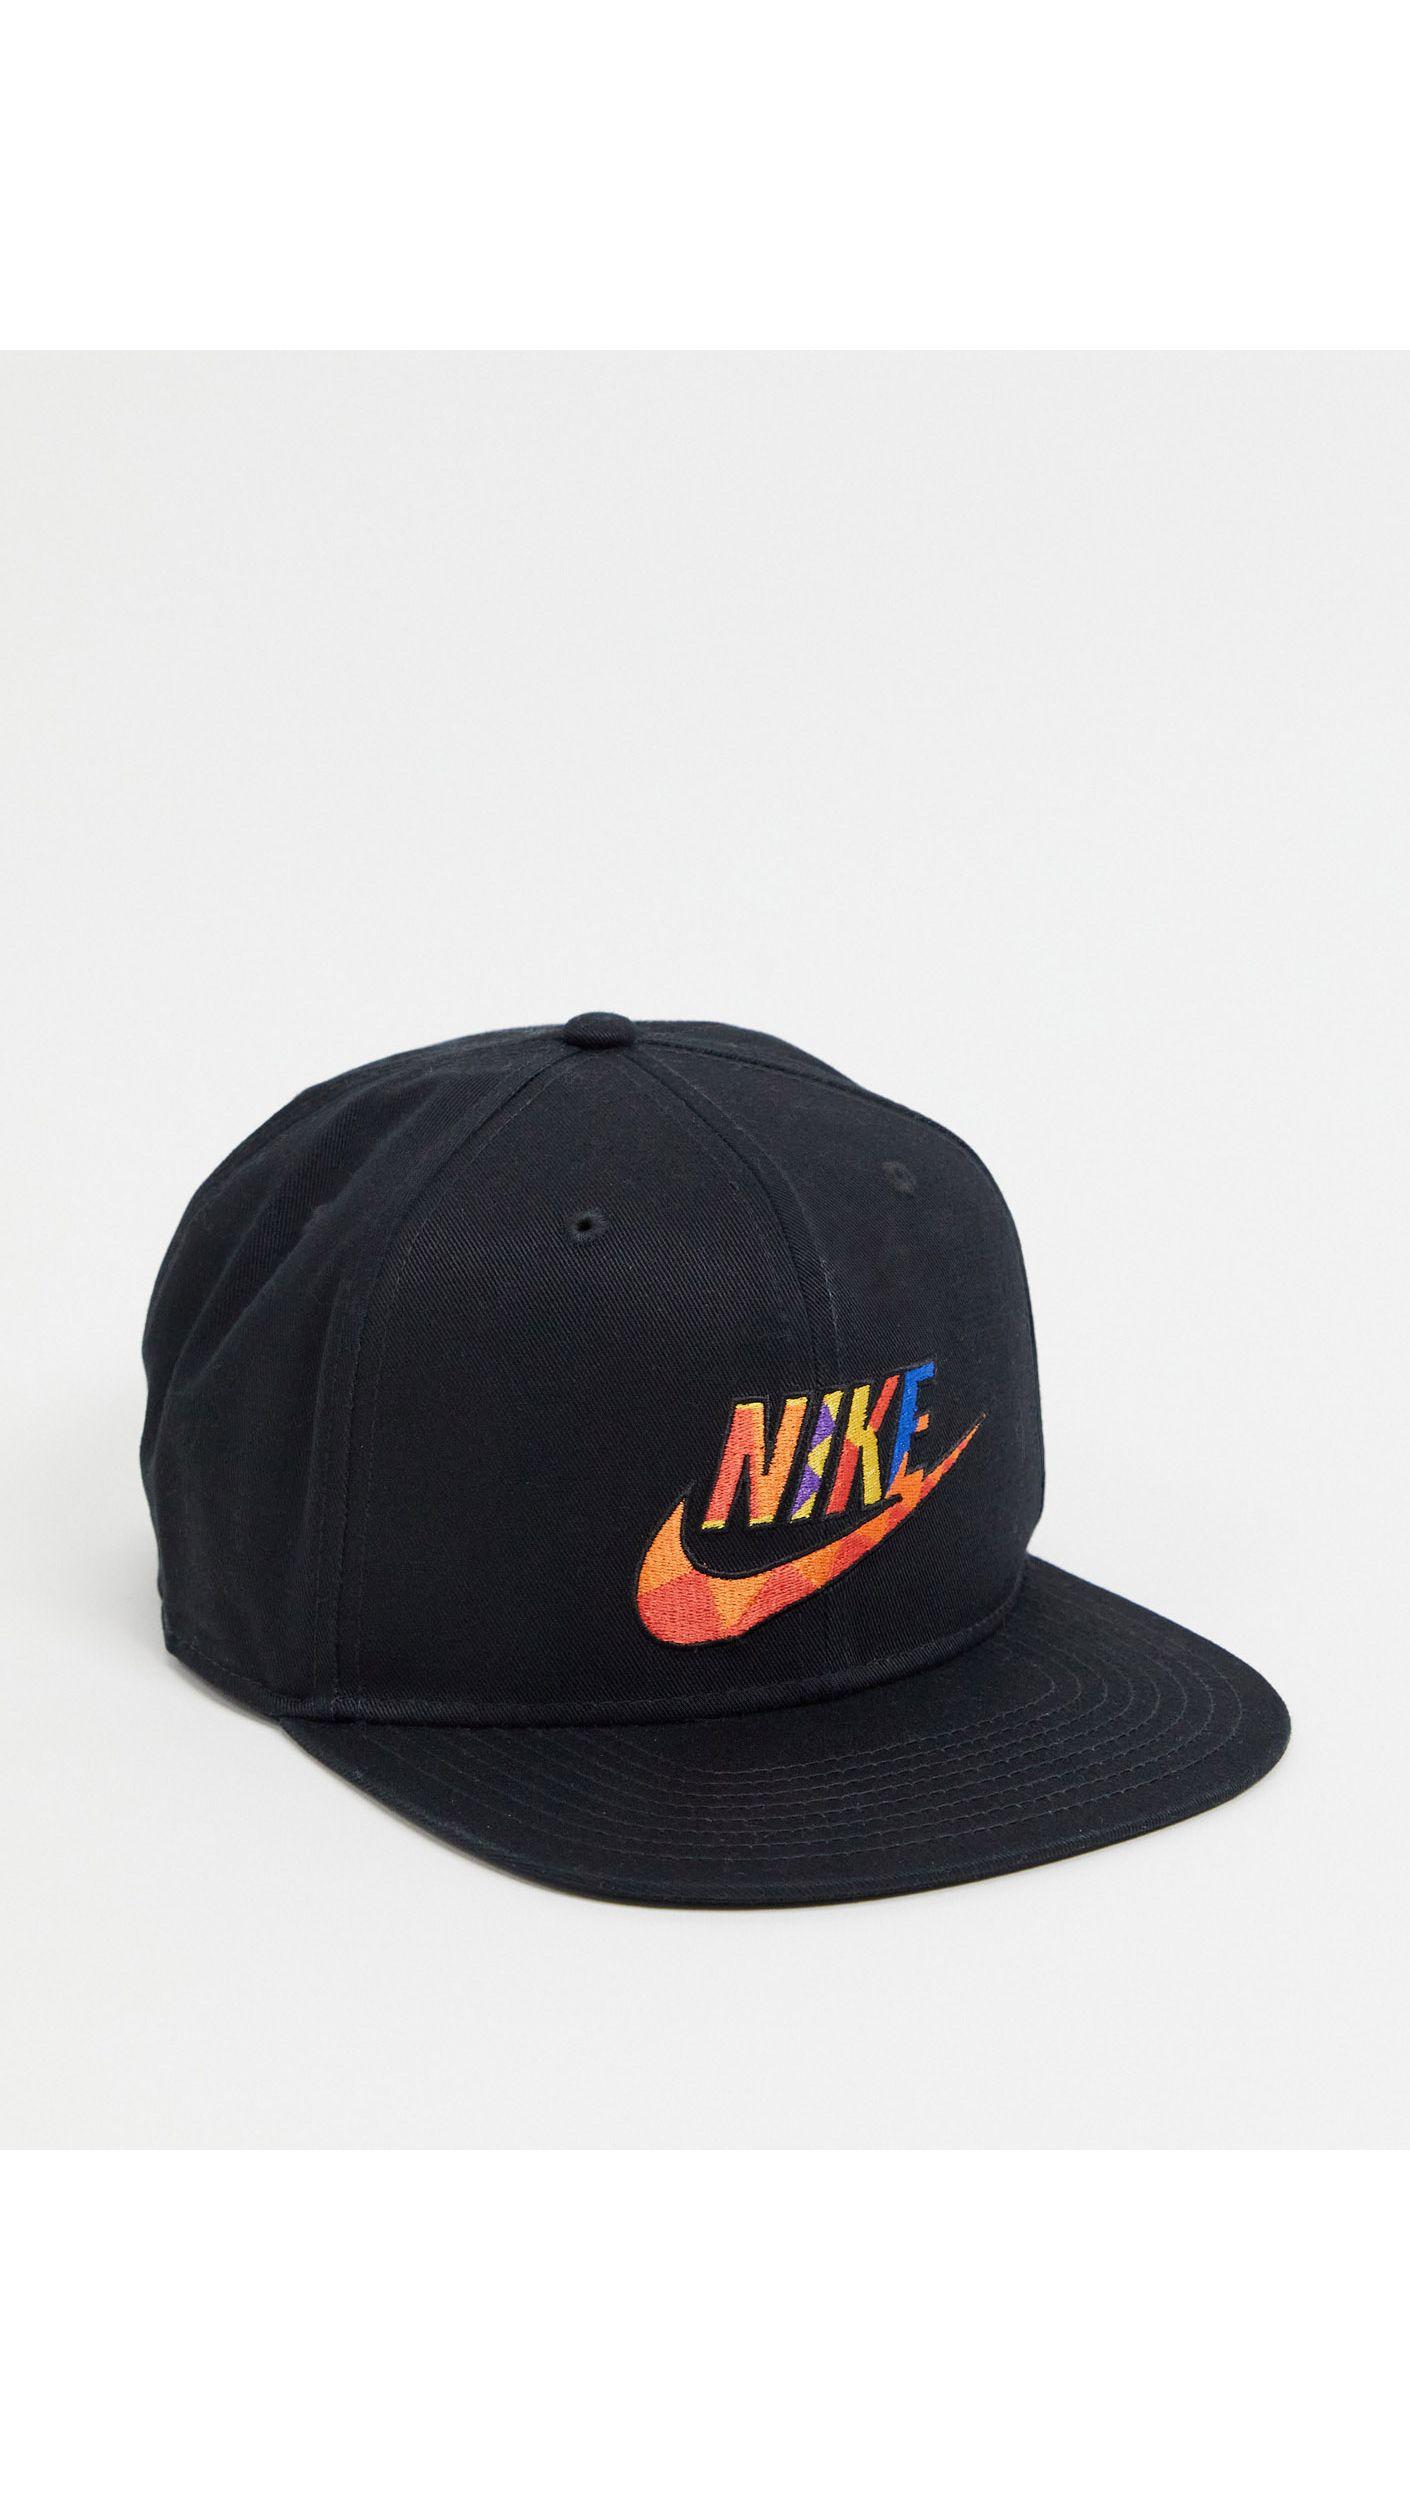 Nike Reissue Just Do It Snapback Cap in Black for Men - Lyst